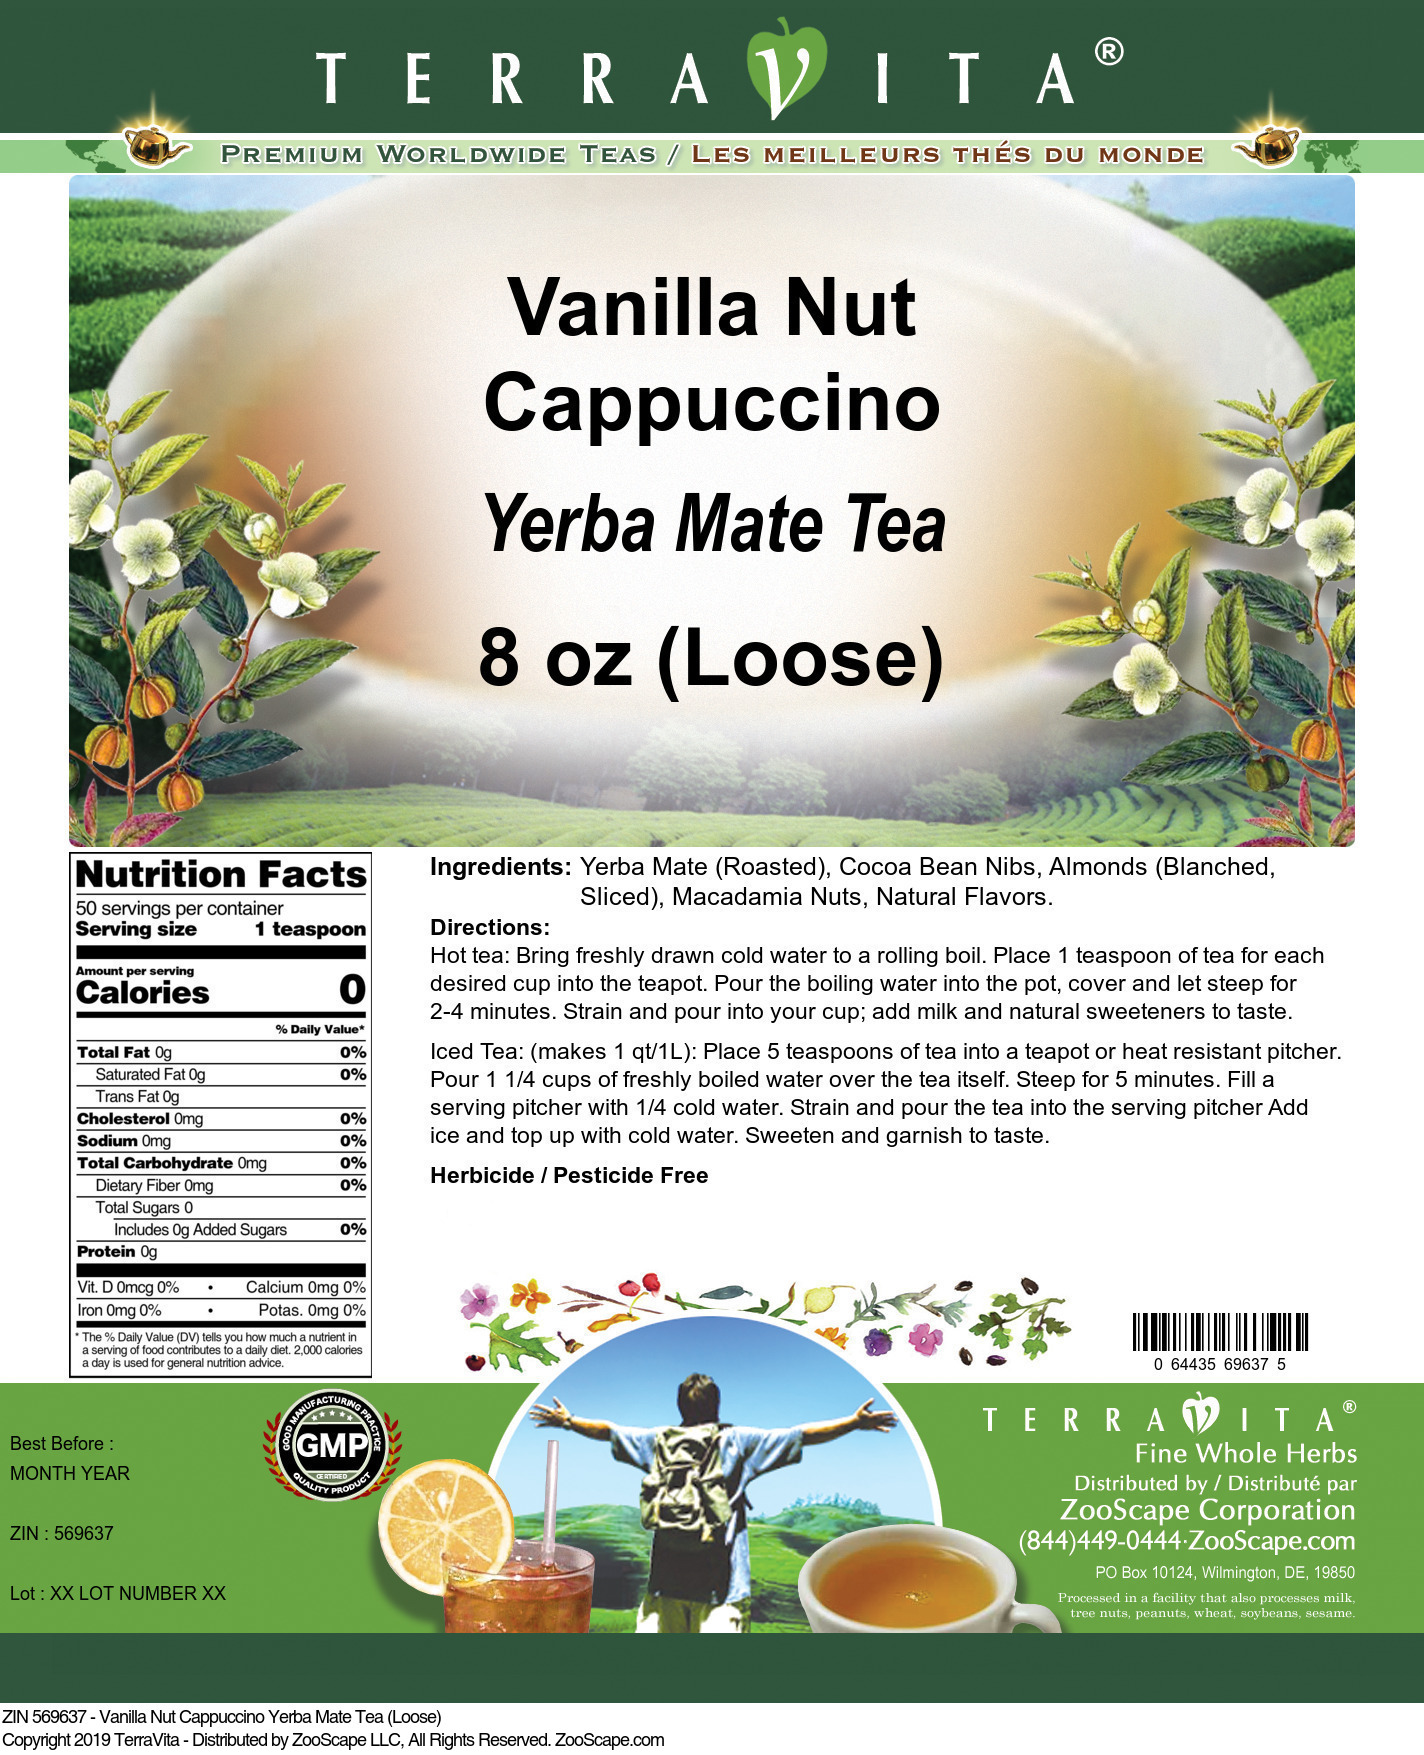 Vanilla Nut Cappuccino Yerba Mate Tea (Loose) - Label